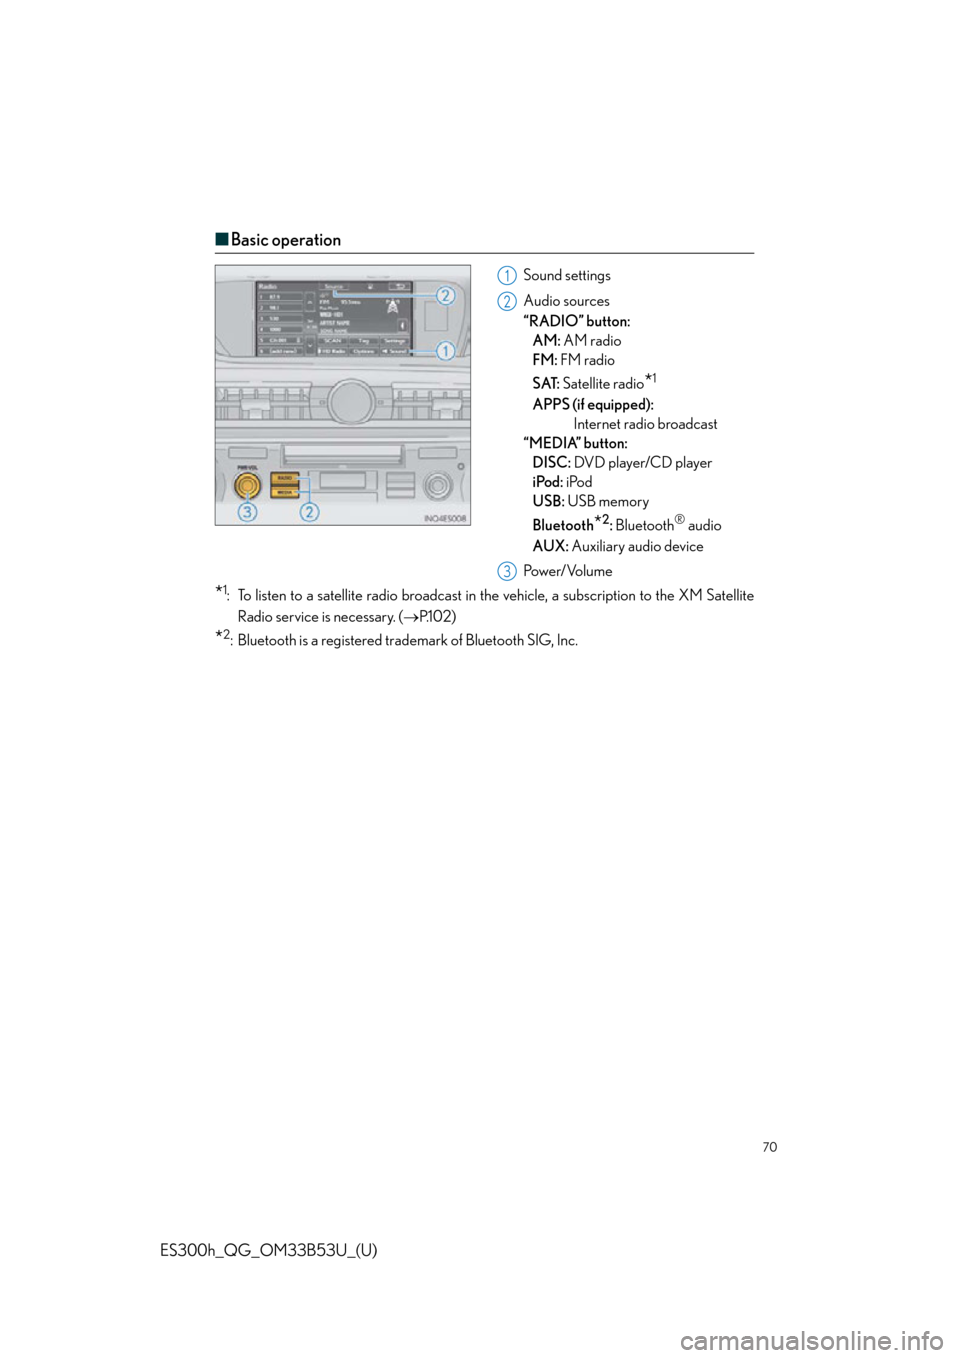 Lexus ES300h 2015  Specifications /  Quick Guide (OM33B53U) Repair Manual 70
ES300h_QG_OM33B53U_(U)
■Basic operation
Sound settings
Audio sources
“RADIO” button: 
AM:  AM radio
FM:  FM radio
SAT:  Satellite radio
*1
APPS (if equipped): 
Internet radio broadcast
“MED